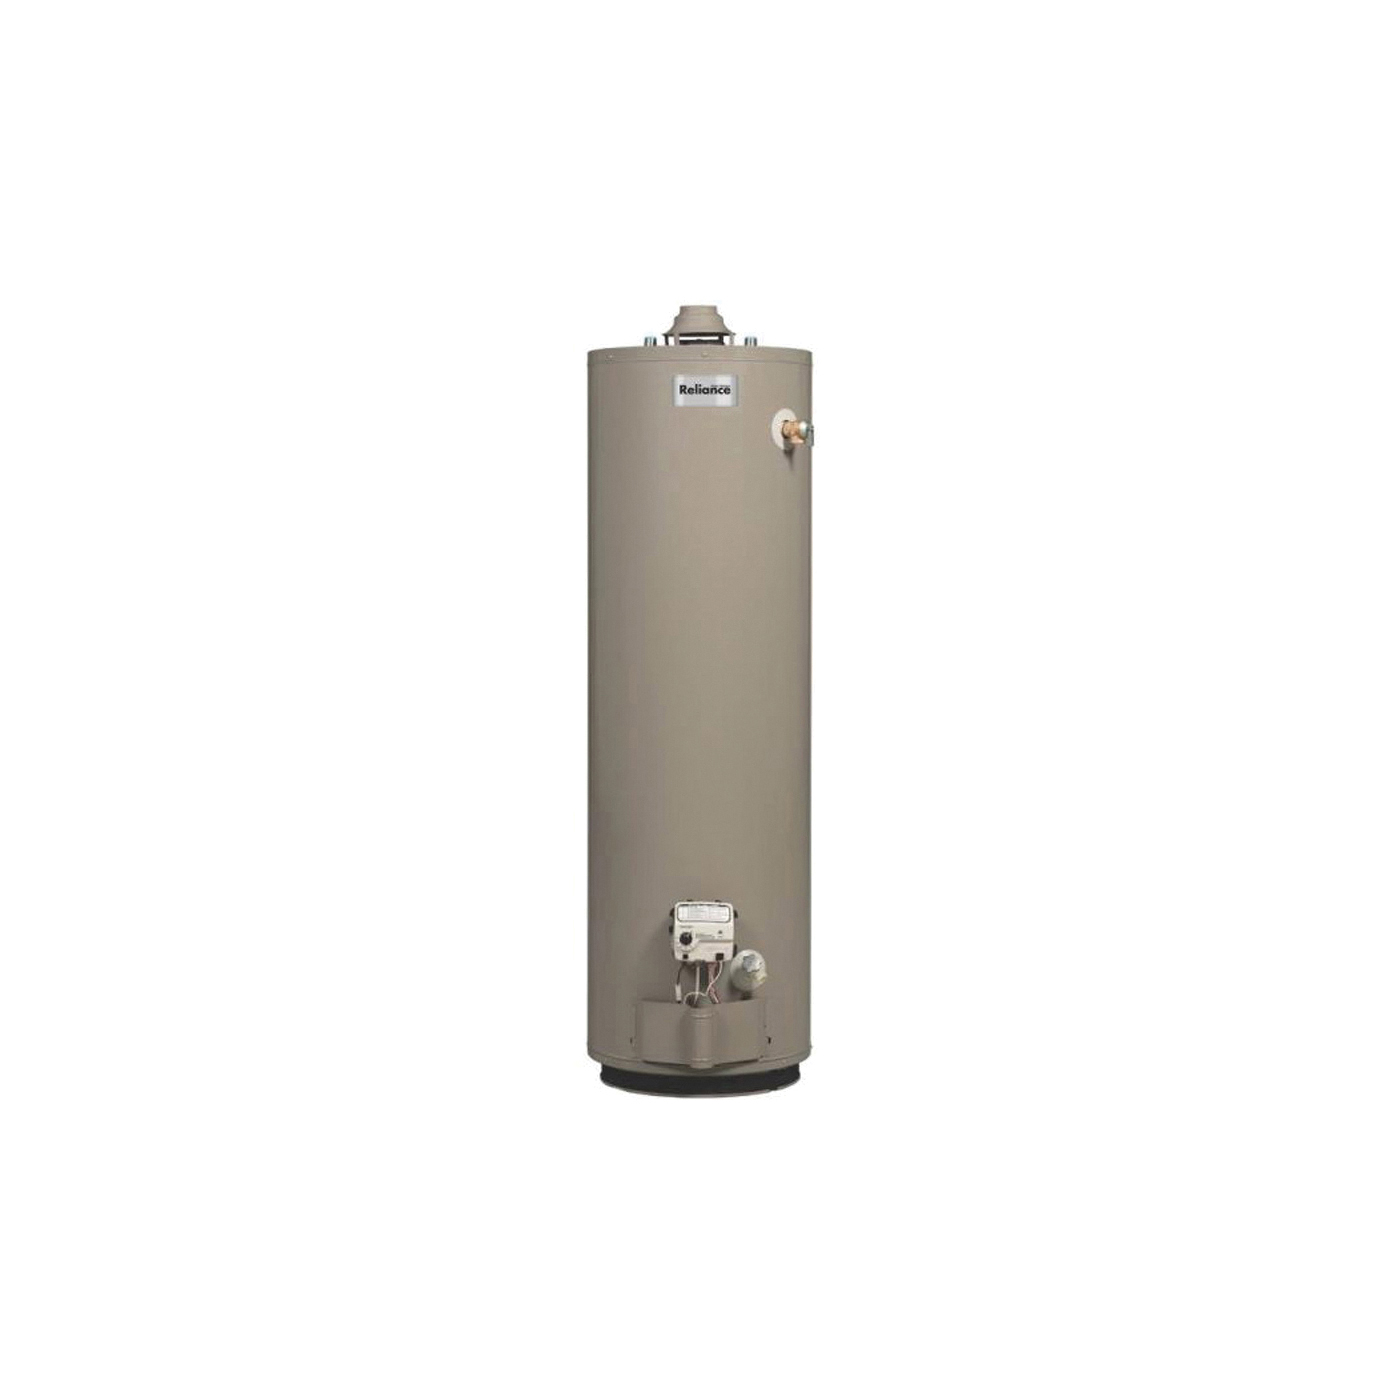 Reliance 6 40 POCT Gas Water Heater, Propane, 40 gal Tank, 65 gph, 35500 Btu BTU, 0.66 Energy Efficiency